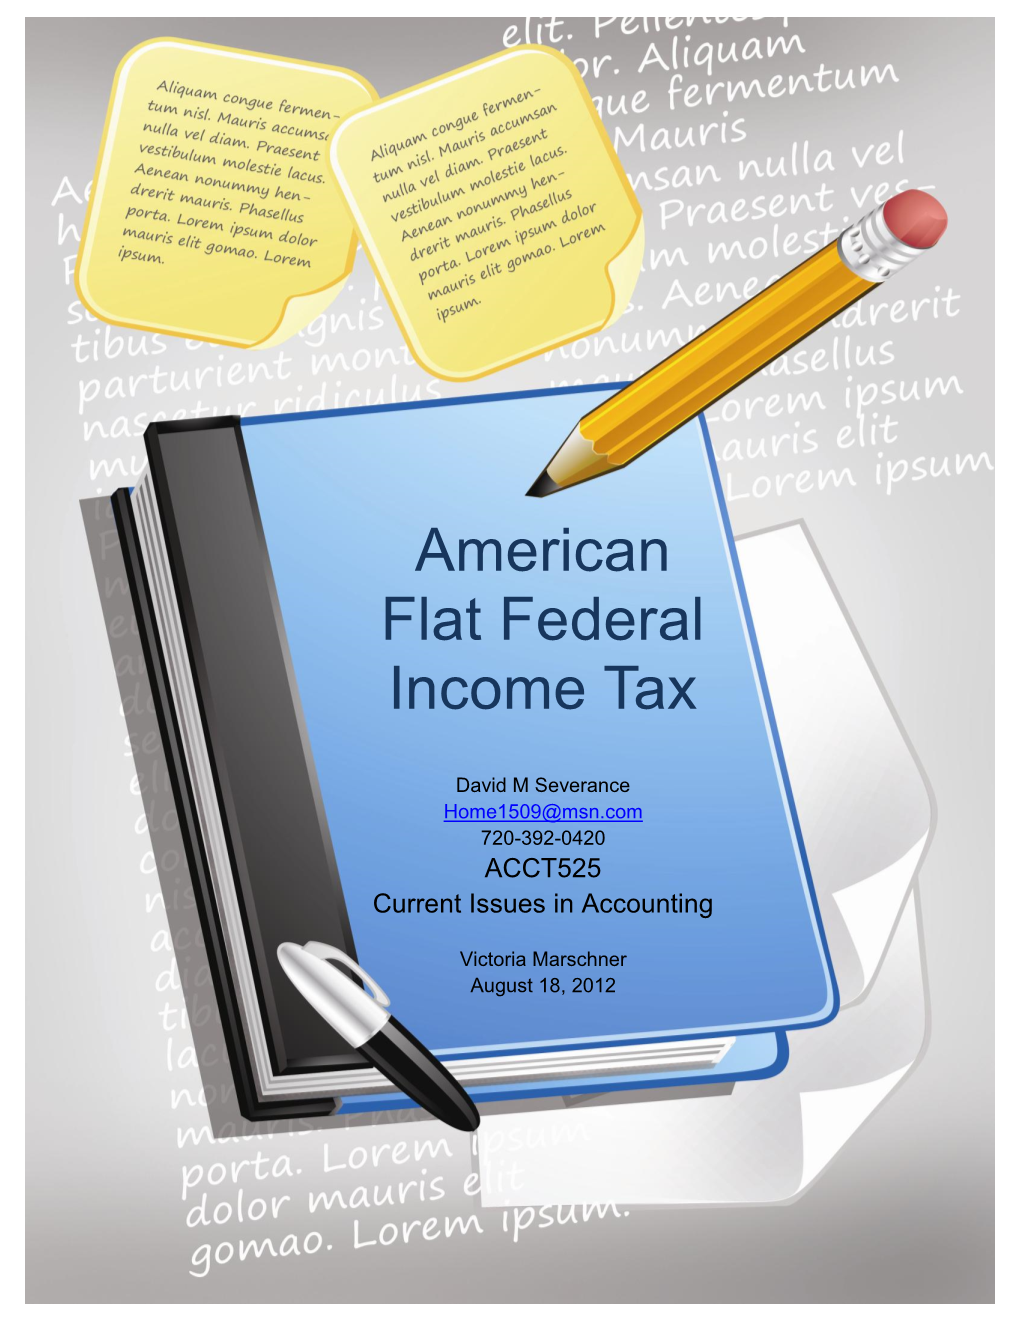 American Flat Federal Income Tax